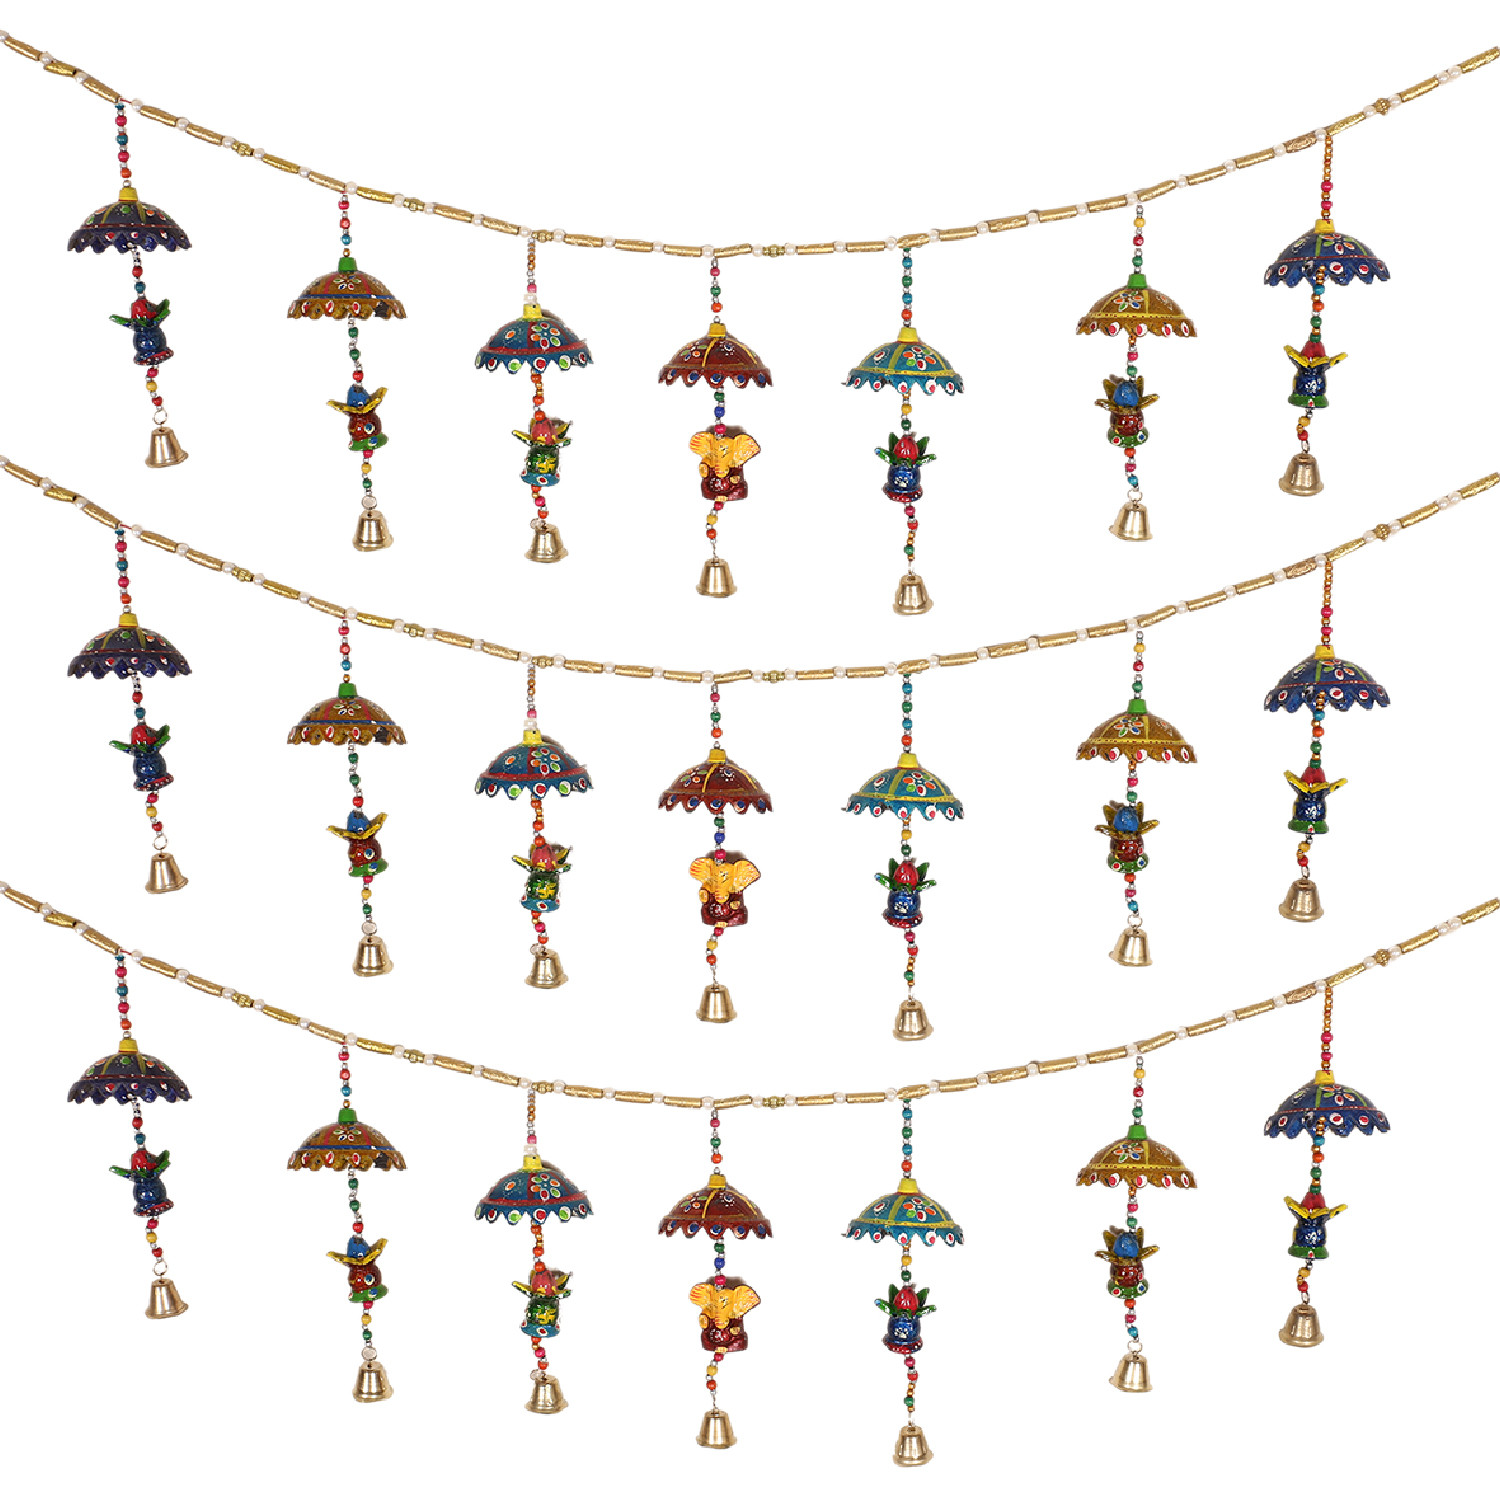 Kuber Industries Handcrafted Kalash Toran|Umbrella Hanging Bandarwal|Door Hanging Windchime for Diwali & Home Decor (Multicolor)